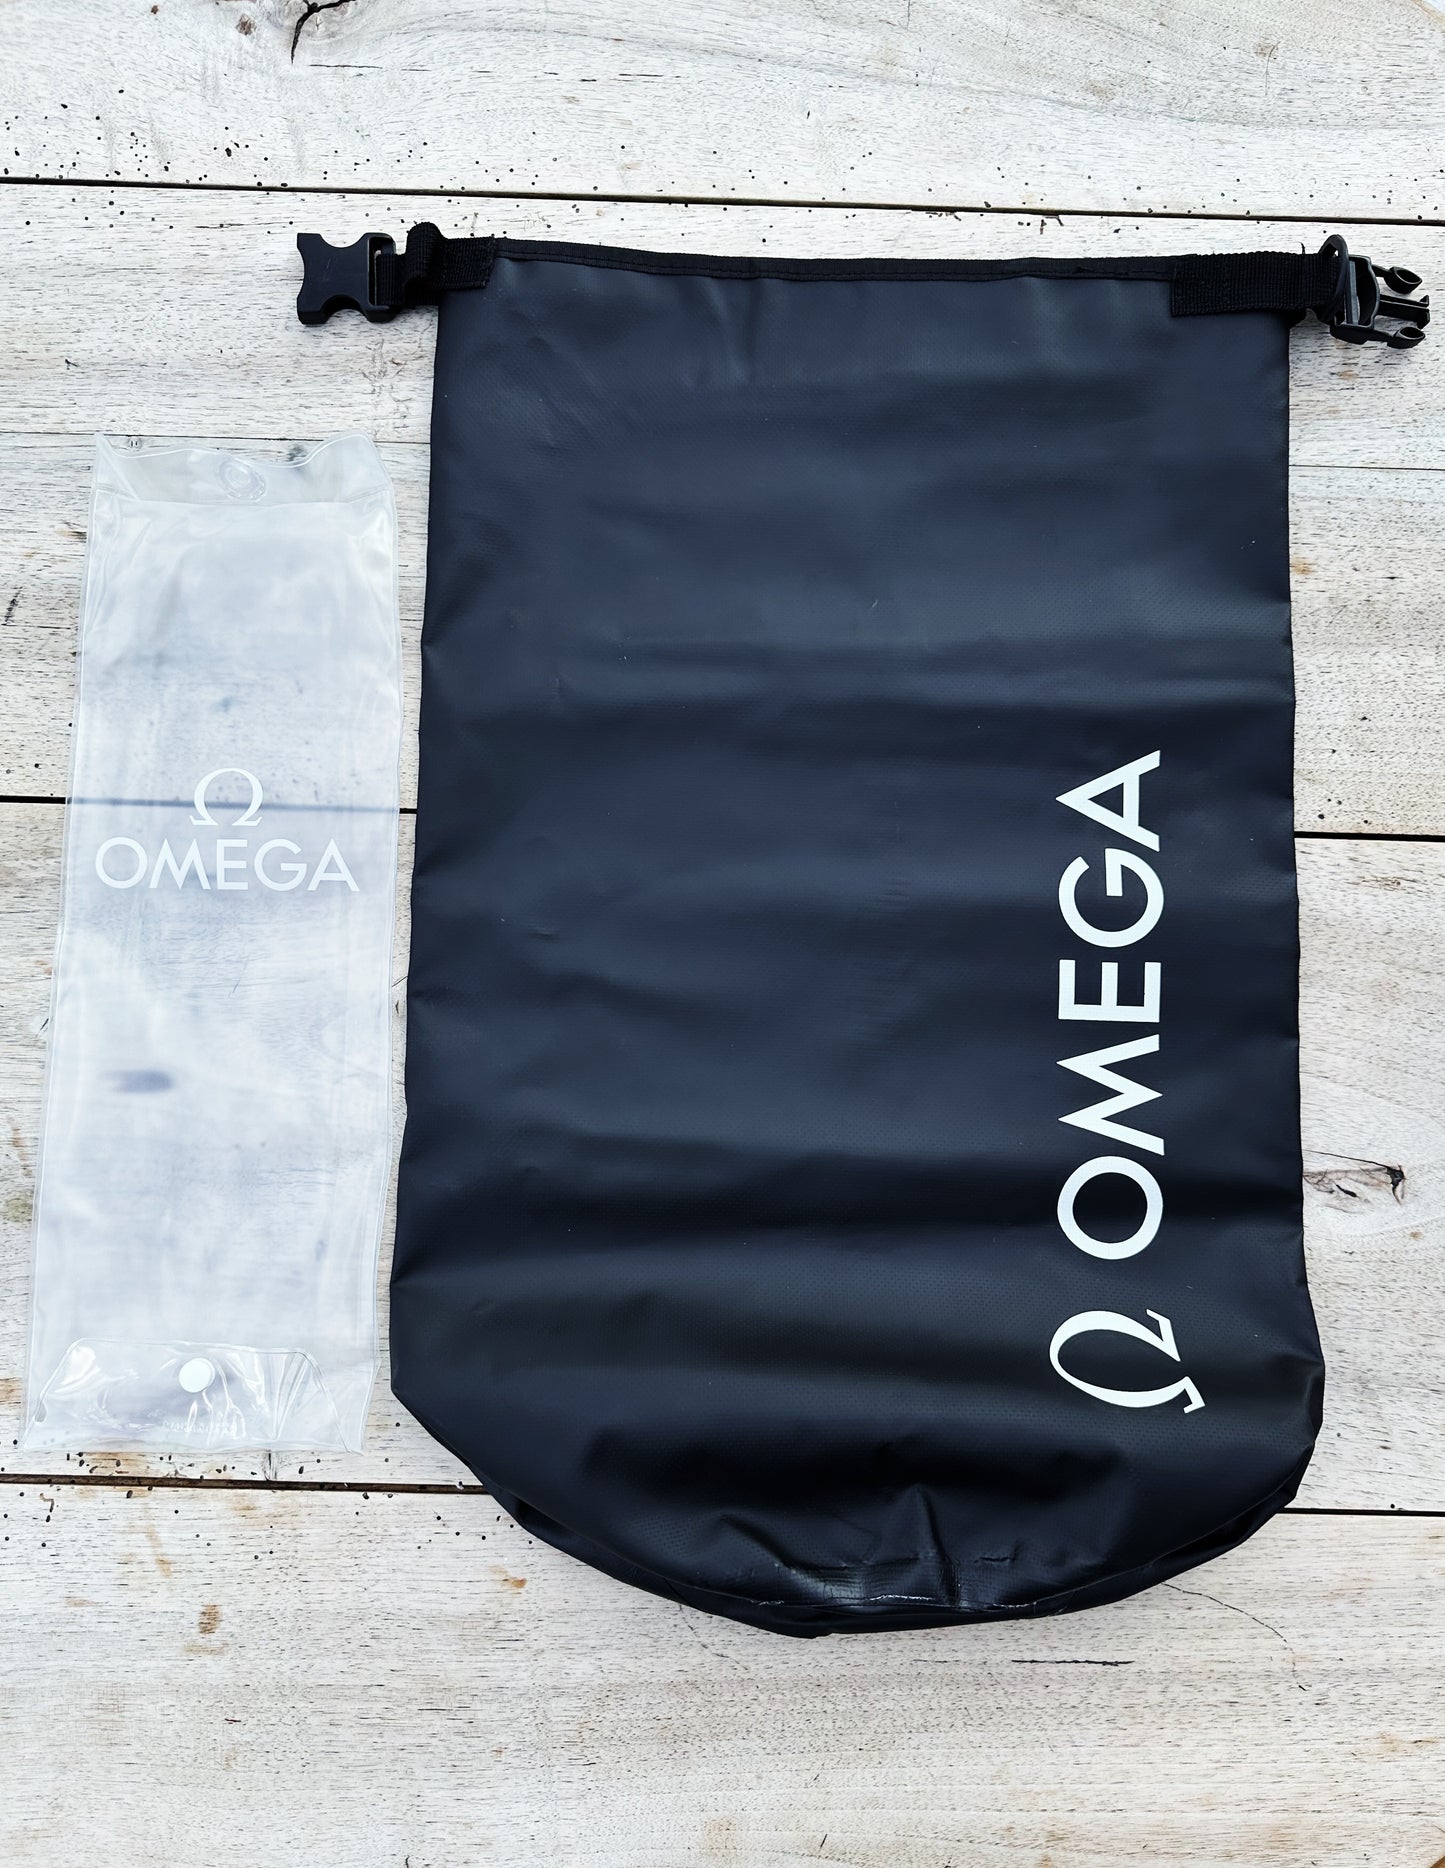 Waterproof bag for boat or sea Omega